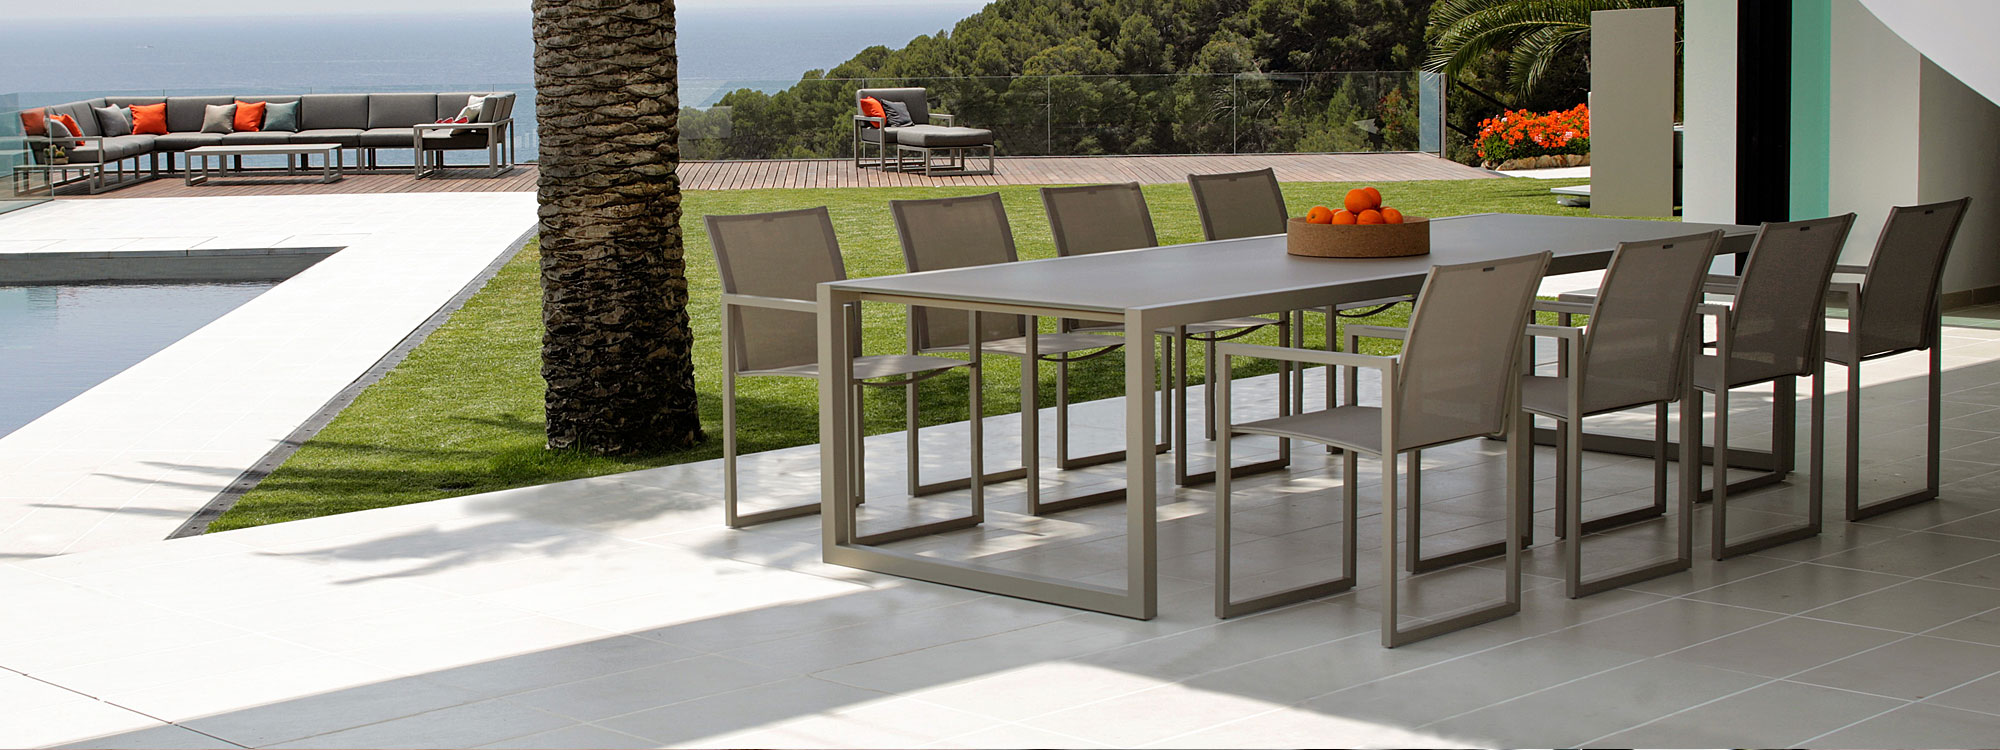 Image of sand coloured Ninix dining set by Royal Botania outdoor furniture